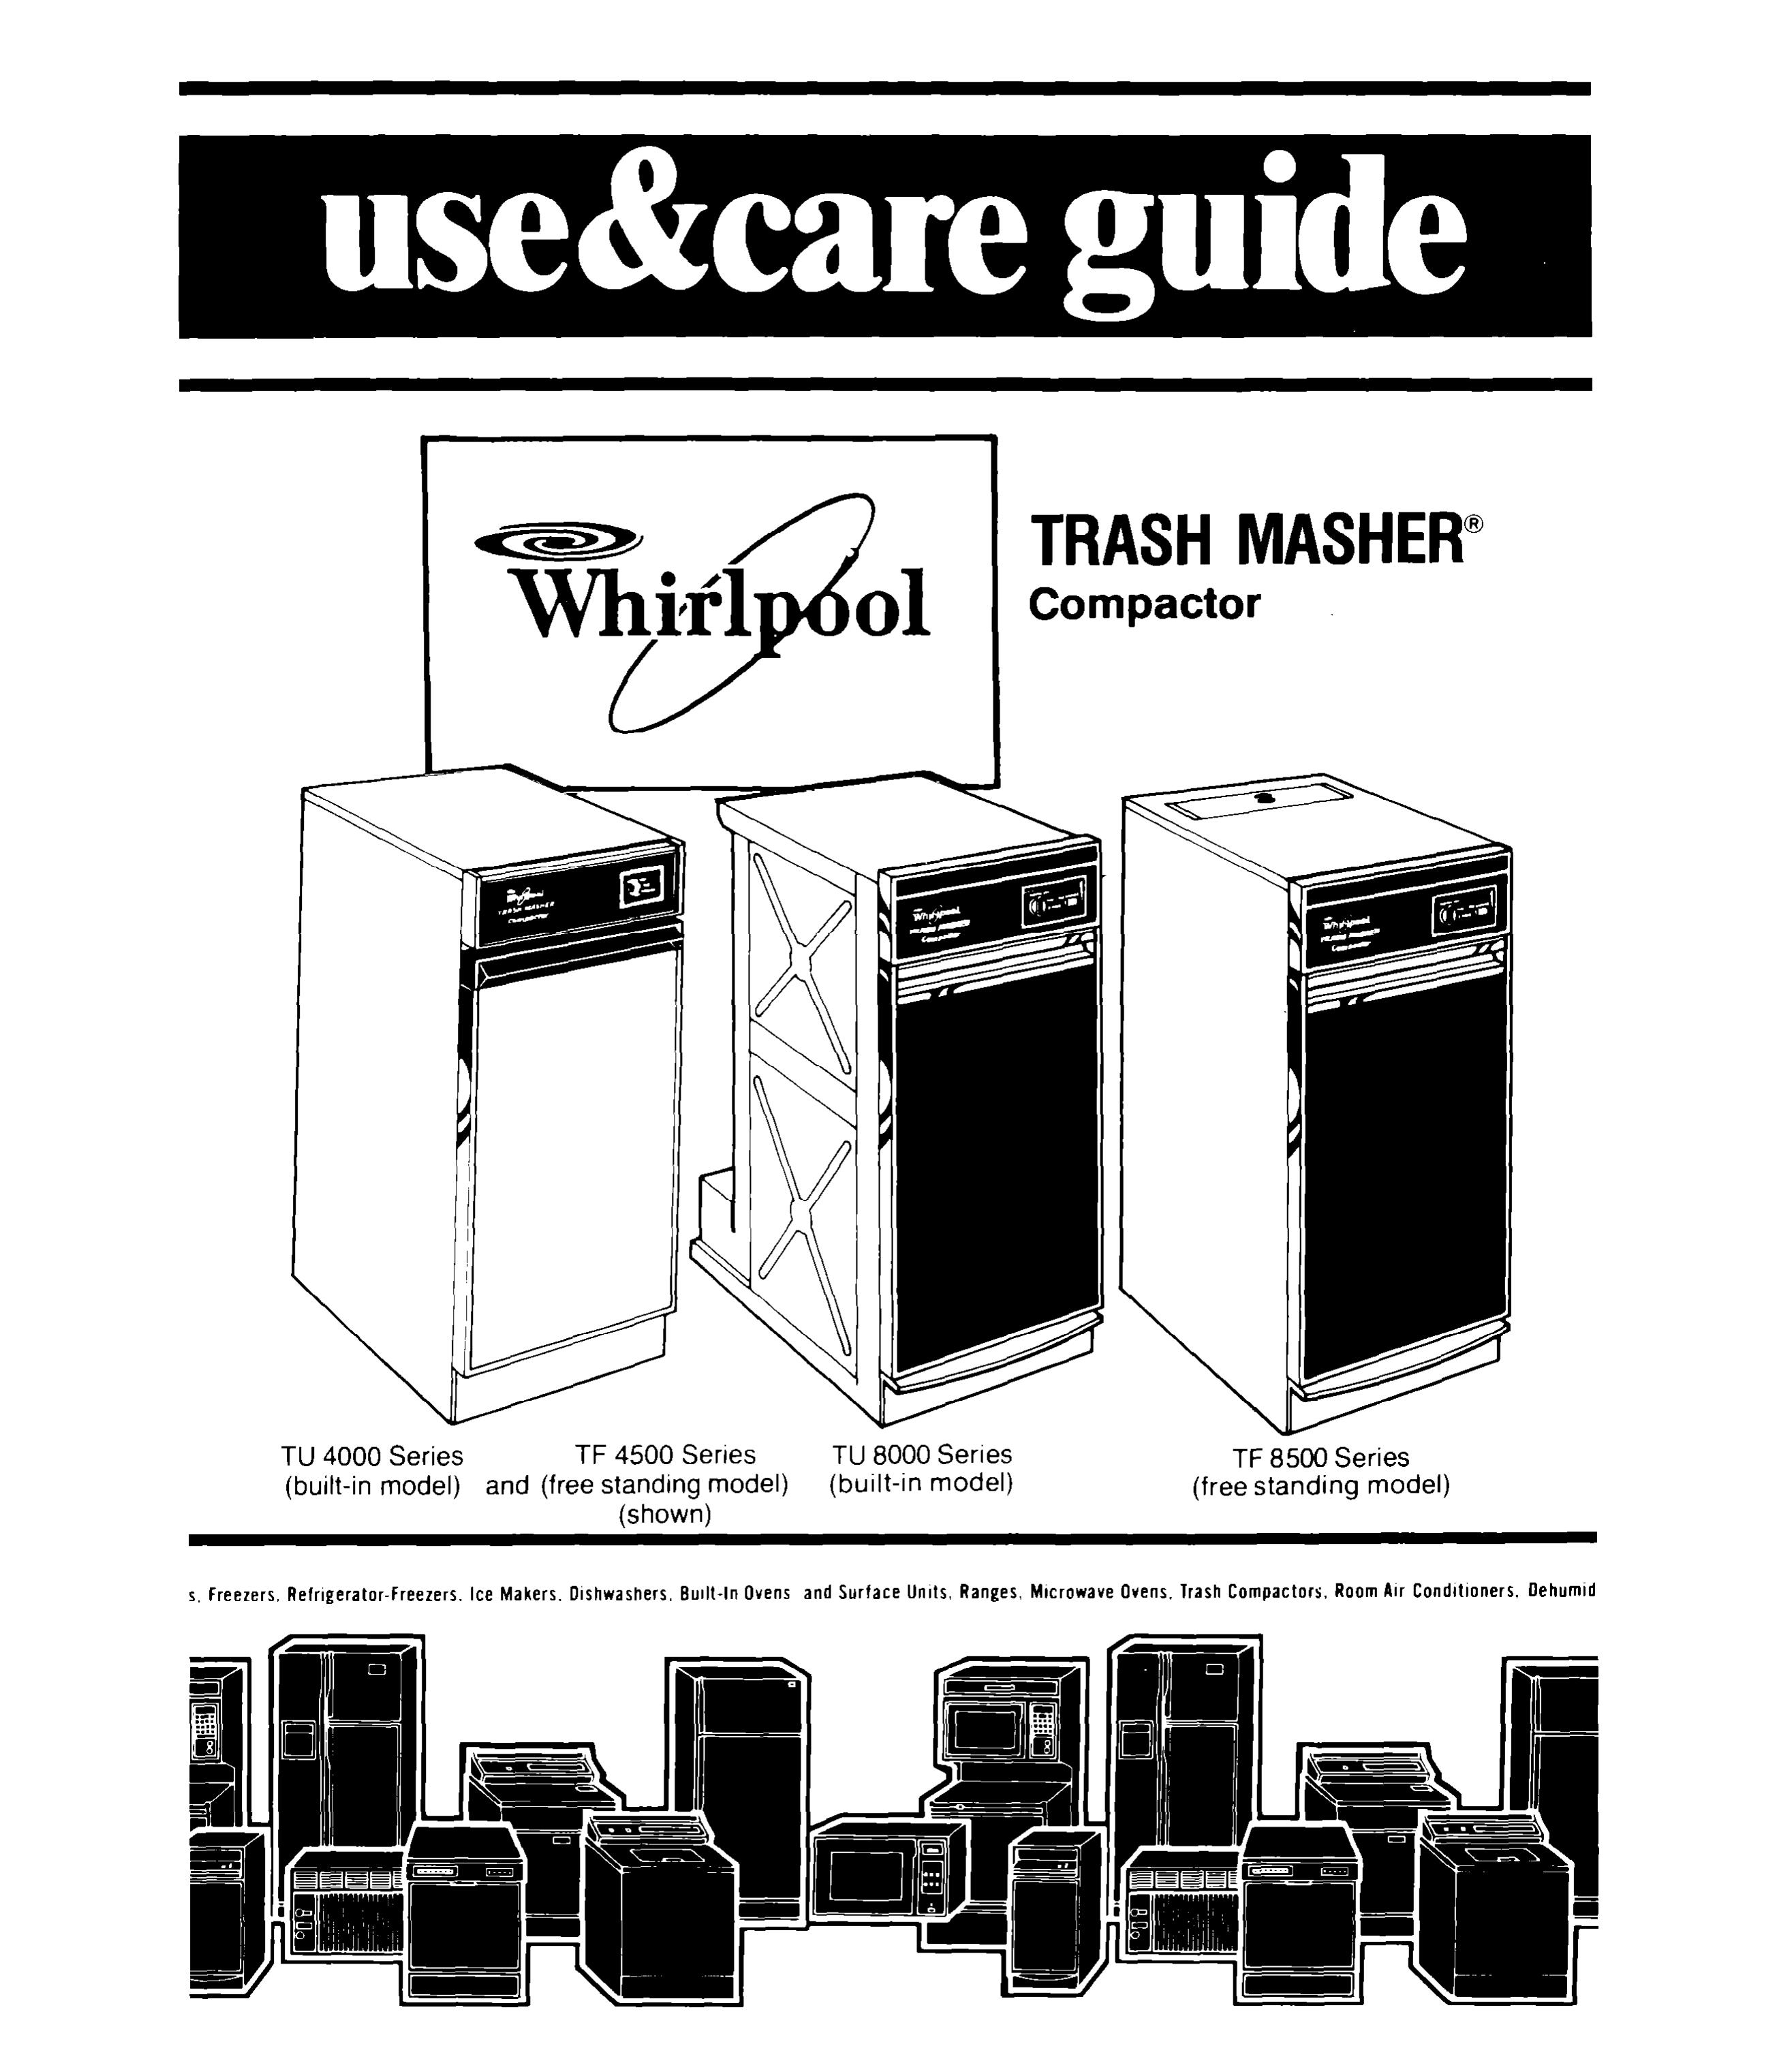 Whirlpool TF 8500 Series Trash Compactor User Manual